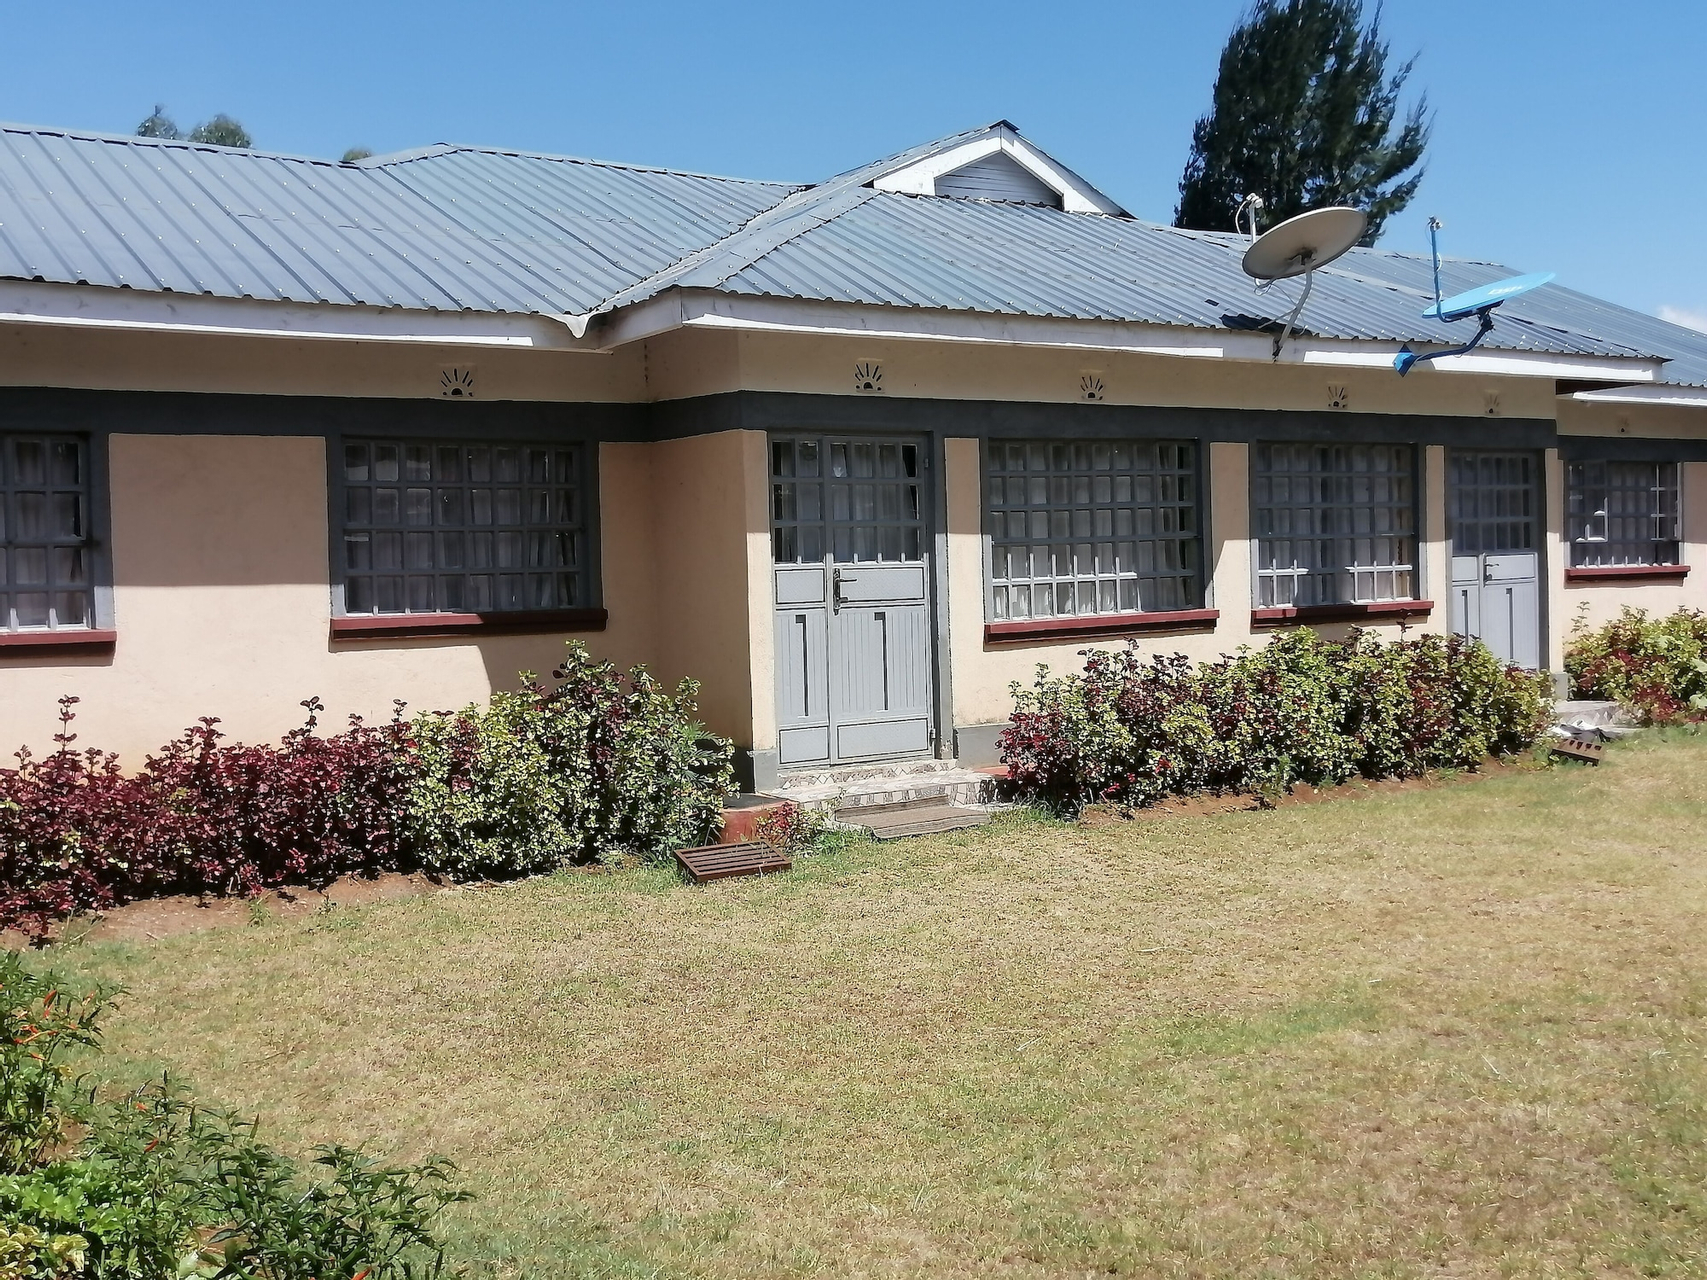 Exterior & Views 1, The Rhine Guest House-Eldoret, Moiben